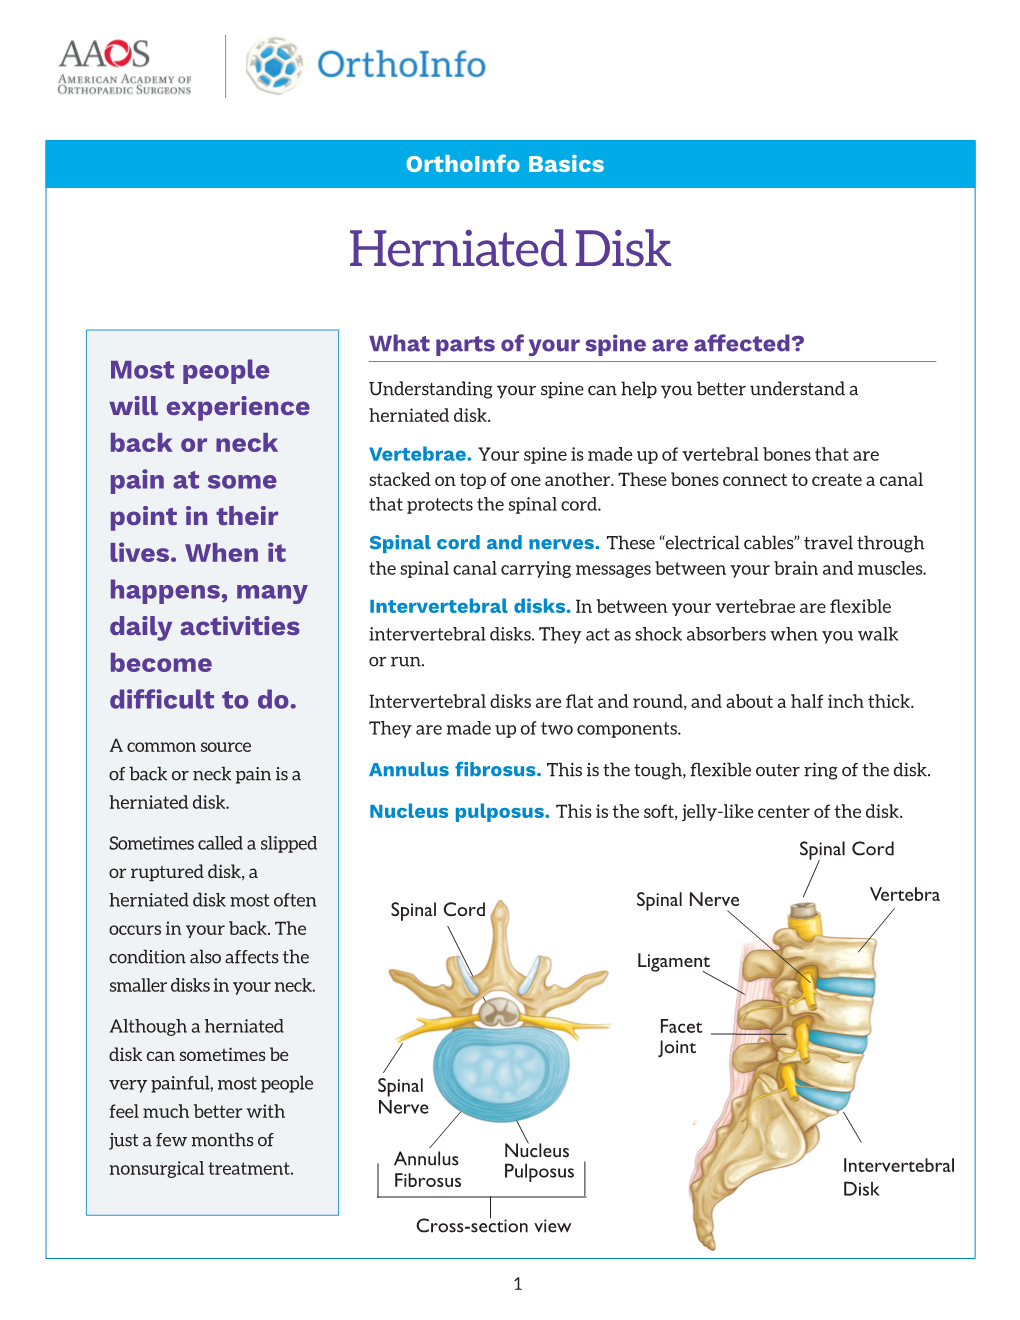 Herniated Disk